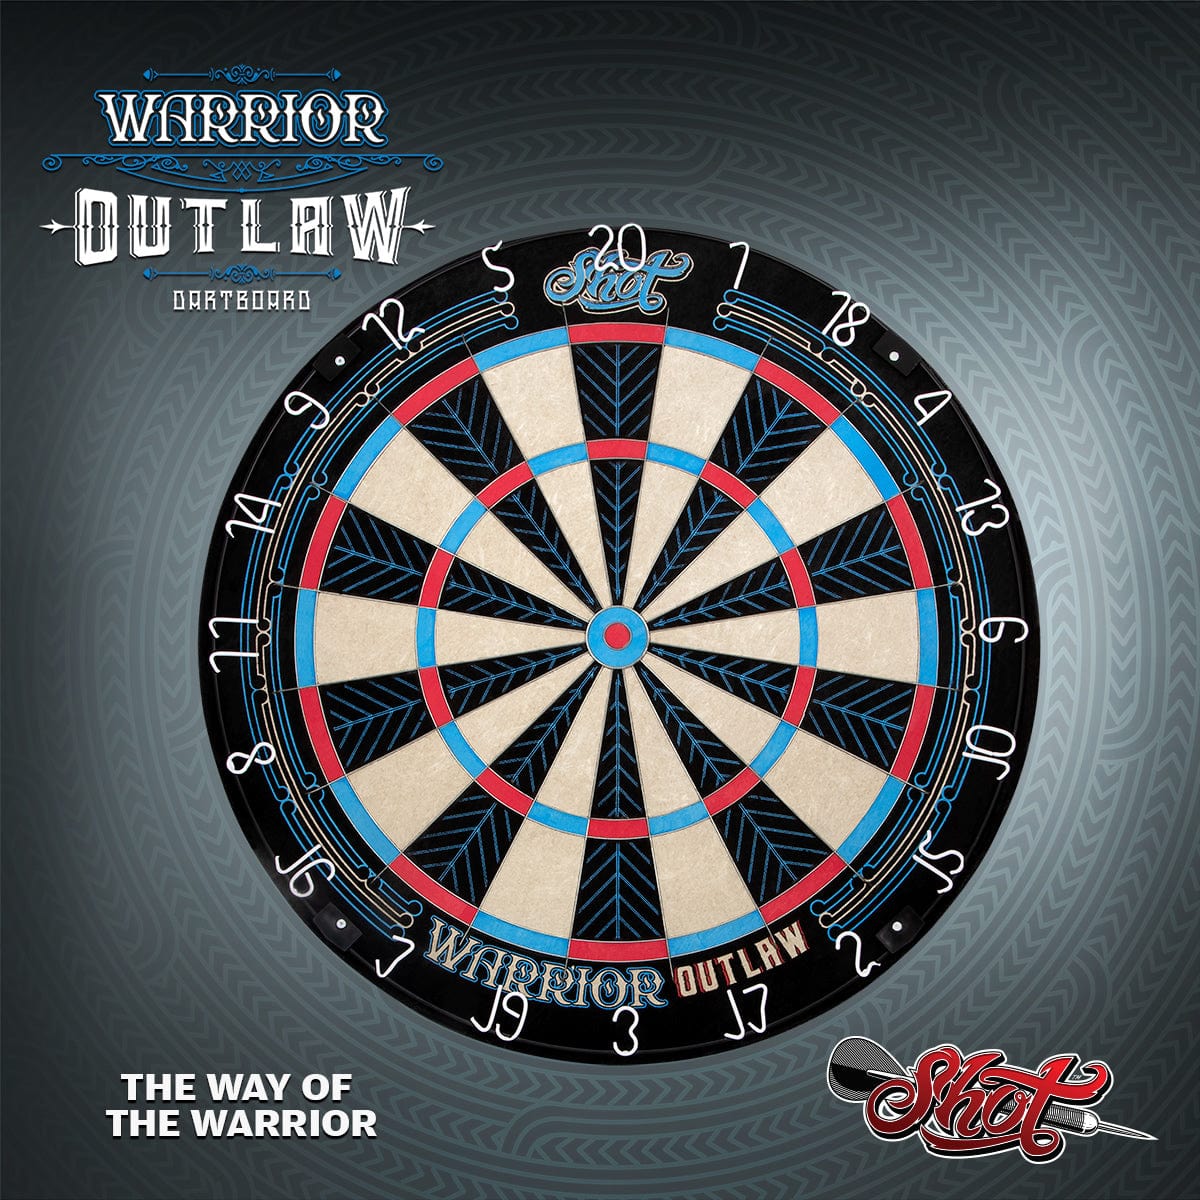 Shot Warrior Outlaw Dartboard - Professional Level - Tournament Size